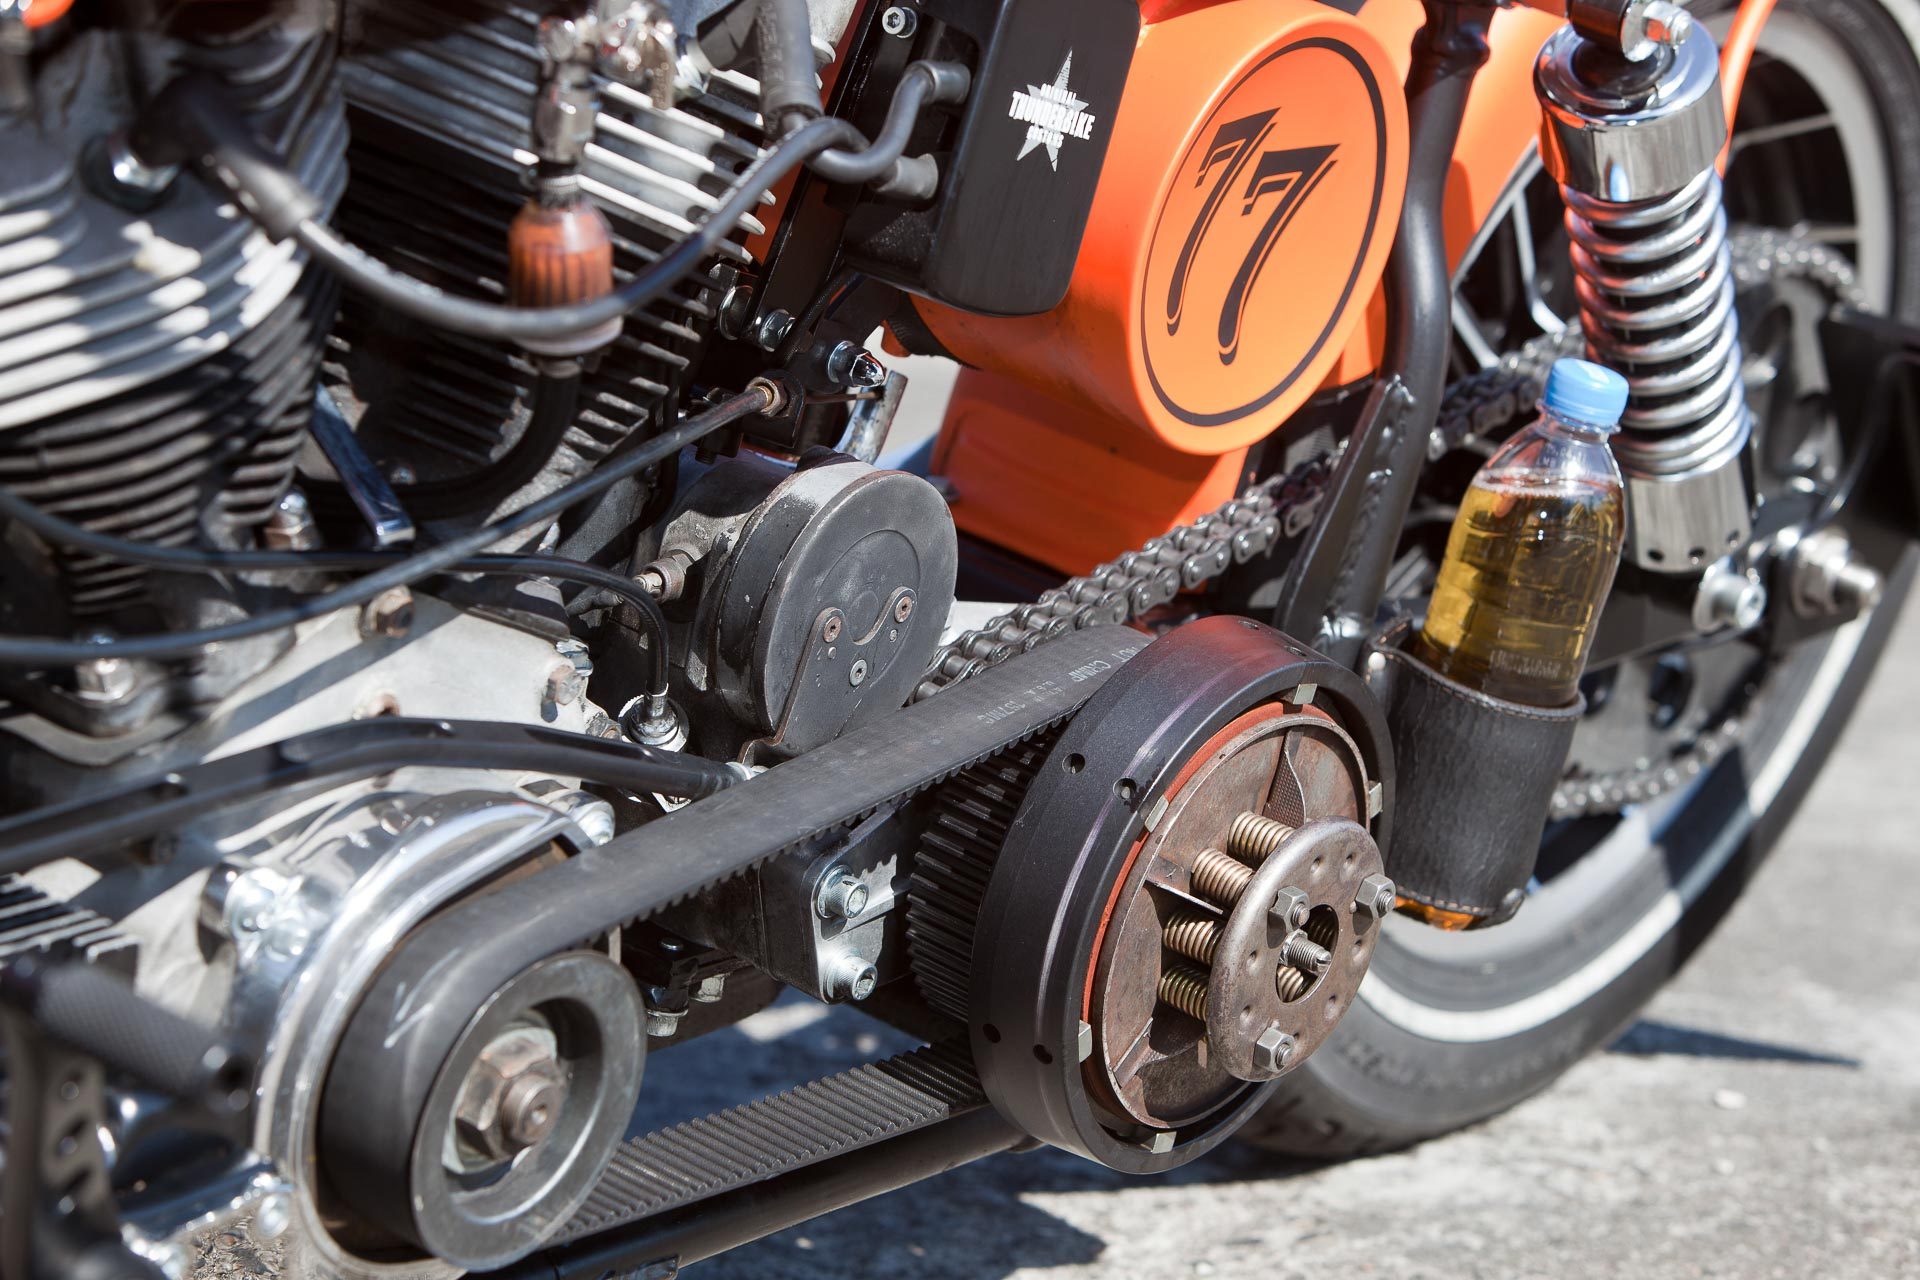 Harley-Davidson P&A 2014 - Part 1 by Thunderbike - Issuu